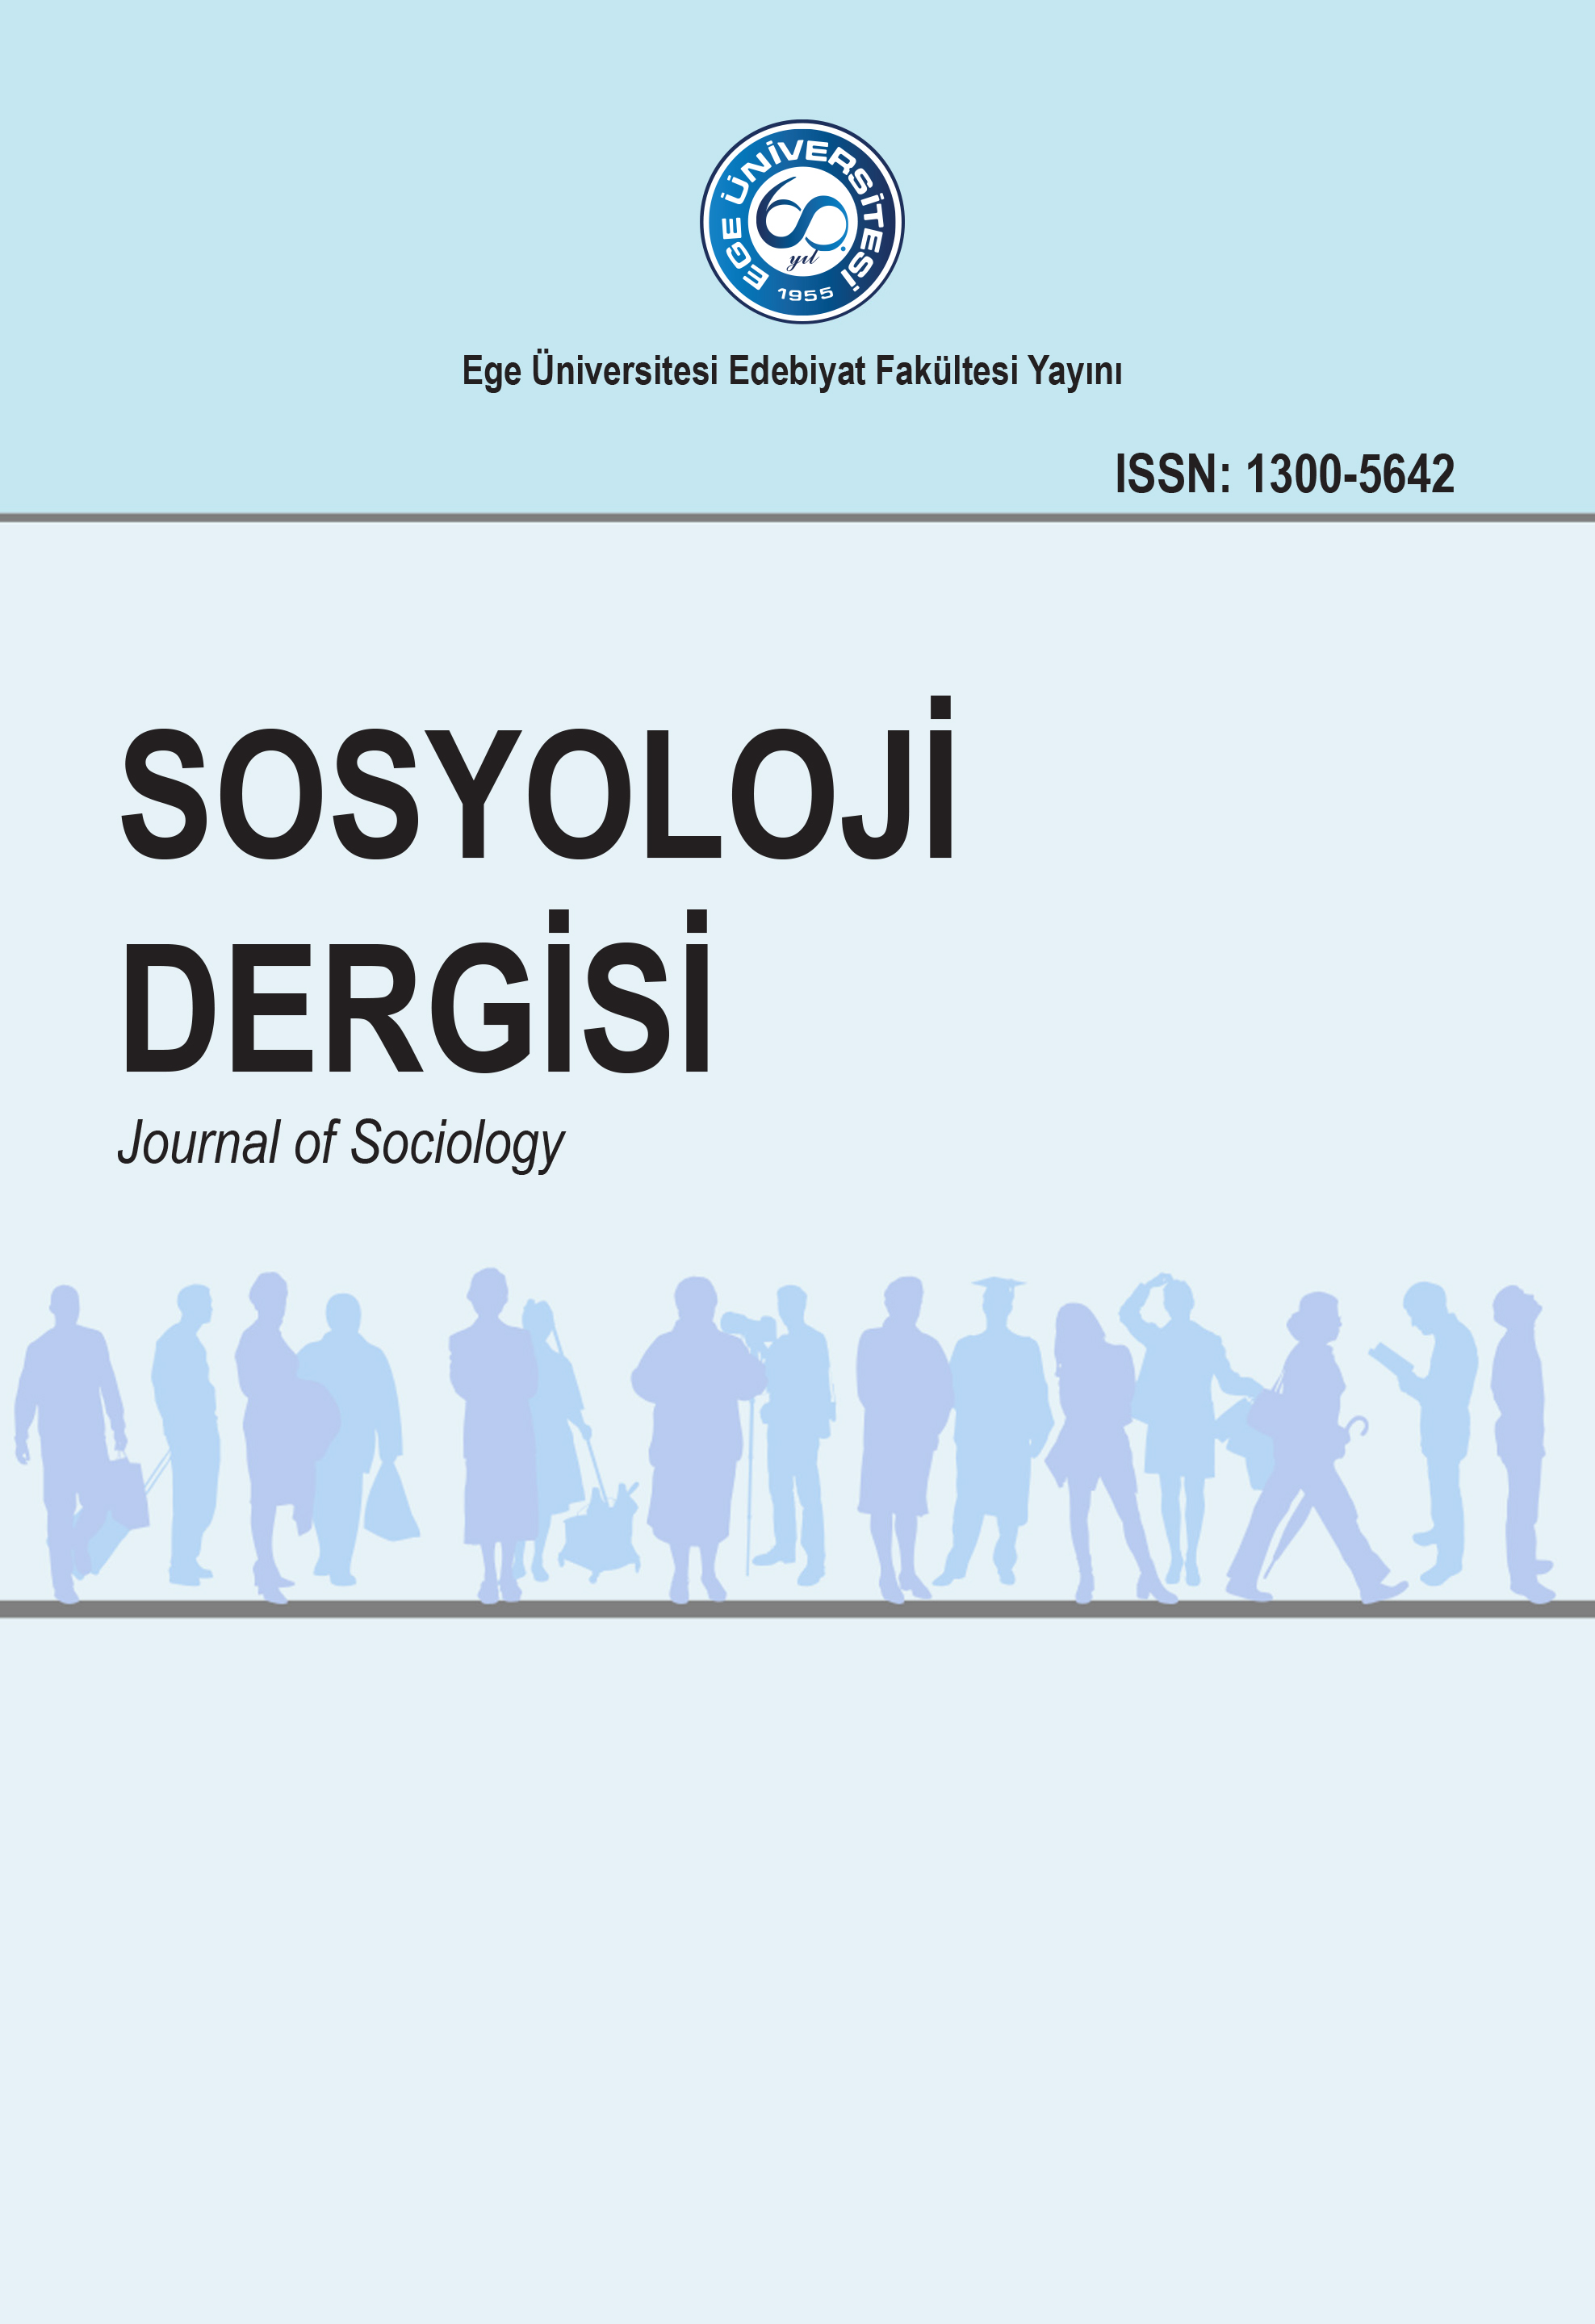 Sosyoloji Dergisi ARMAĞAN SAYISI